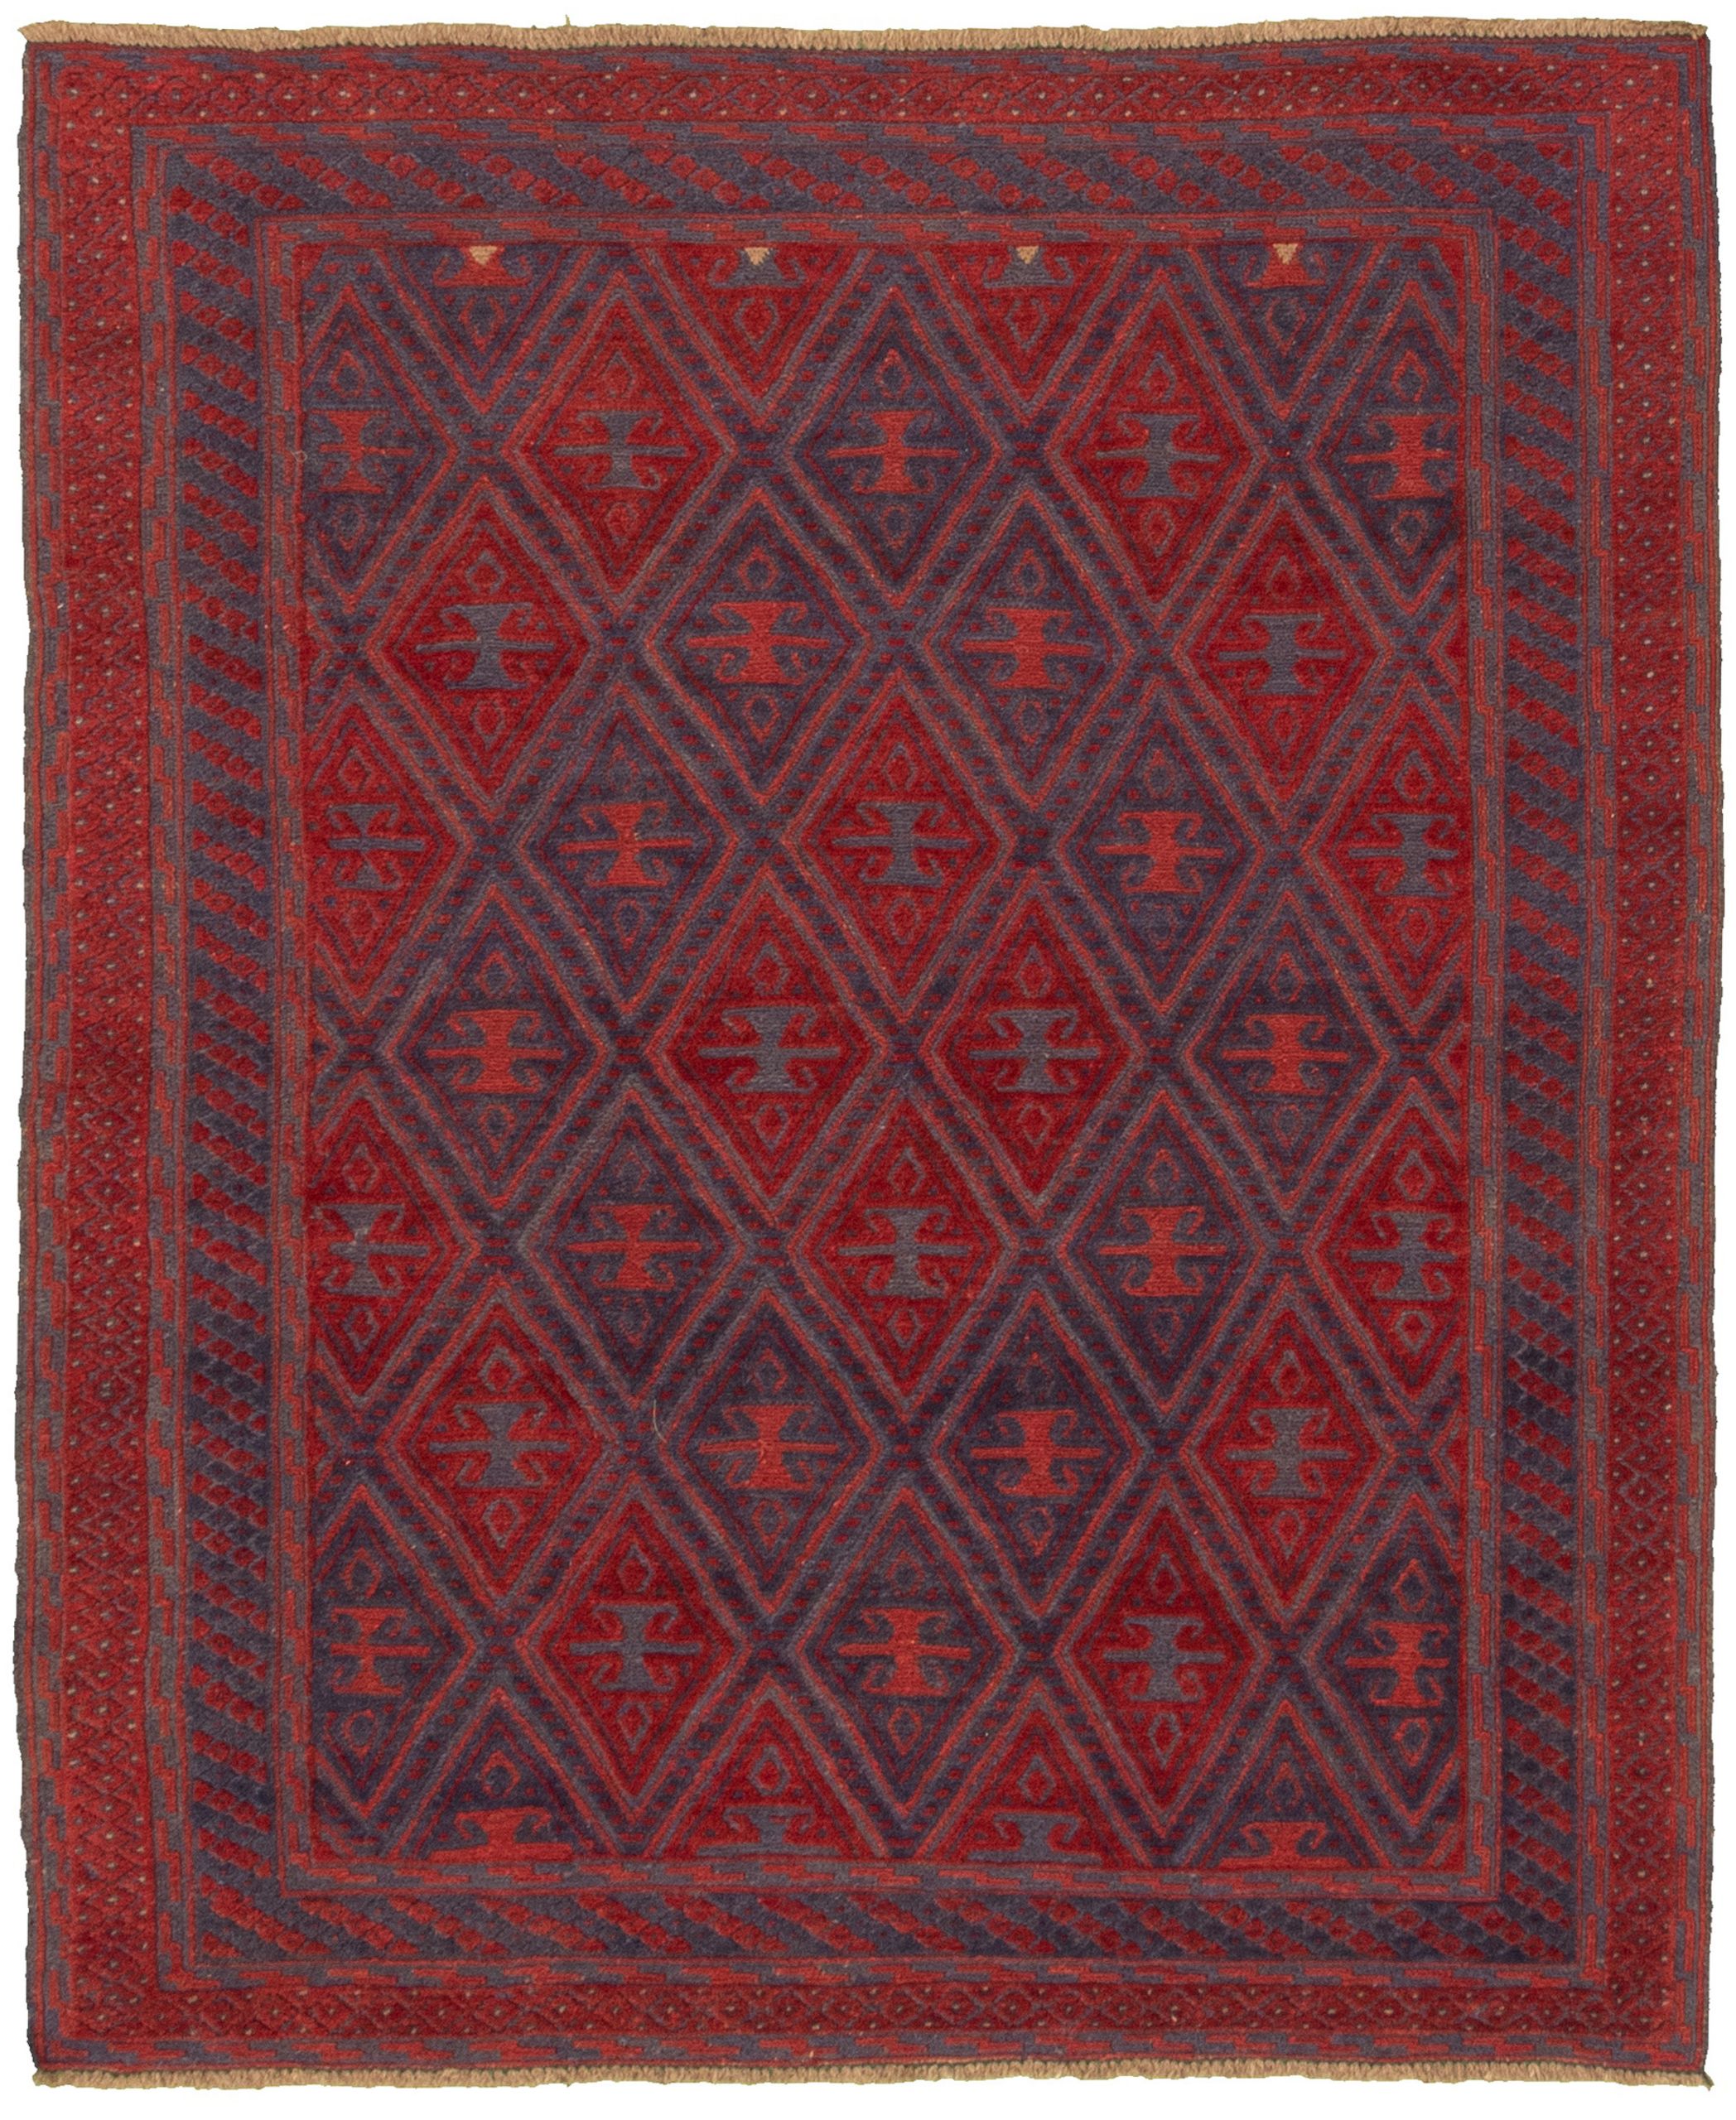 Hand-knotted Tajik Dark Red Wool Rug 4'9" x 5'8"  Size: 4'9" x 5'8"  